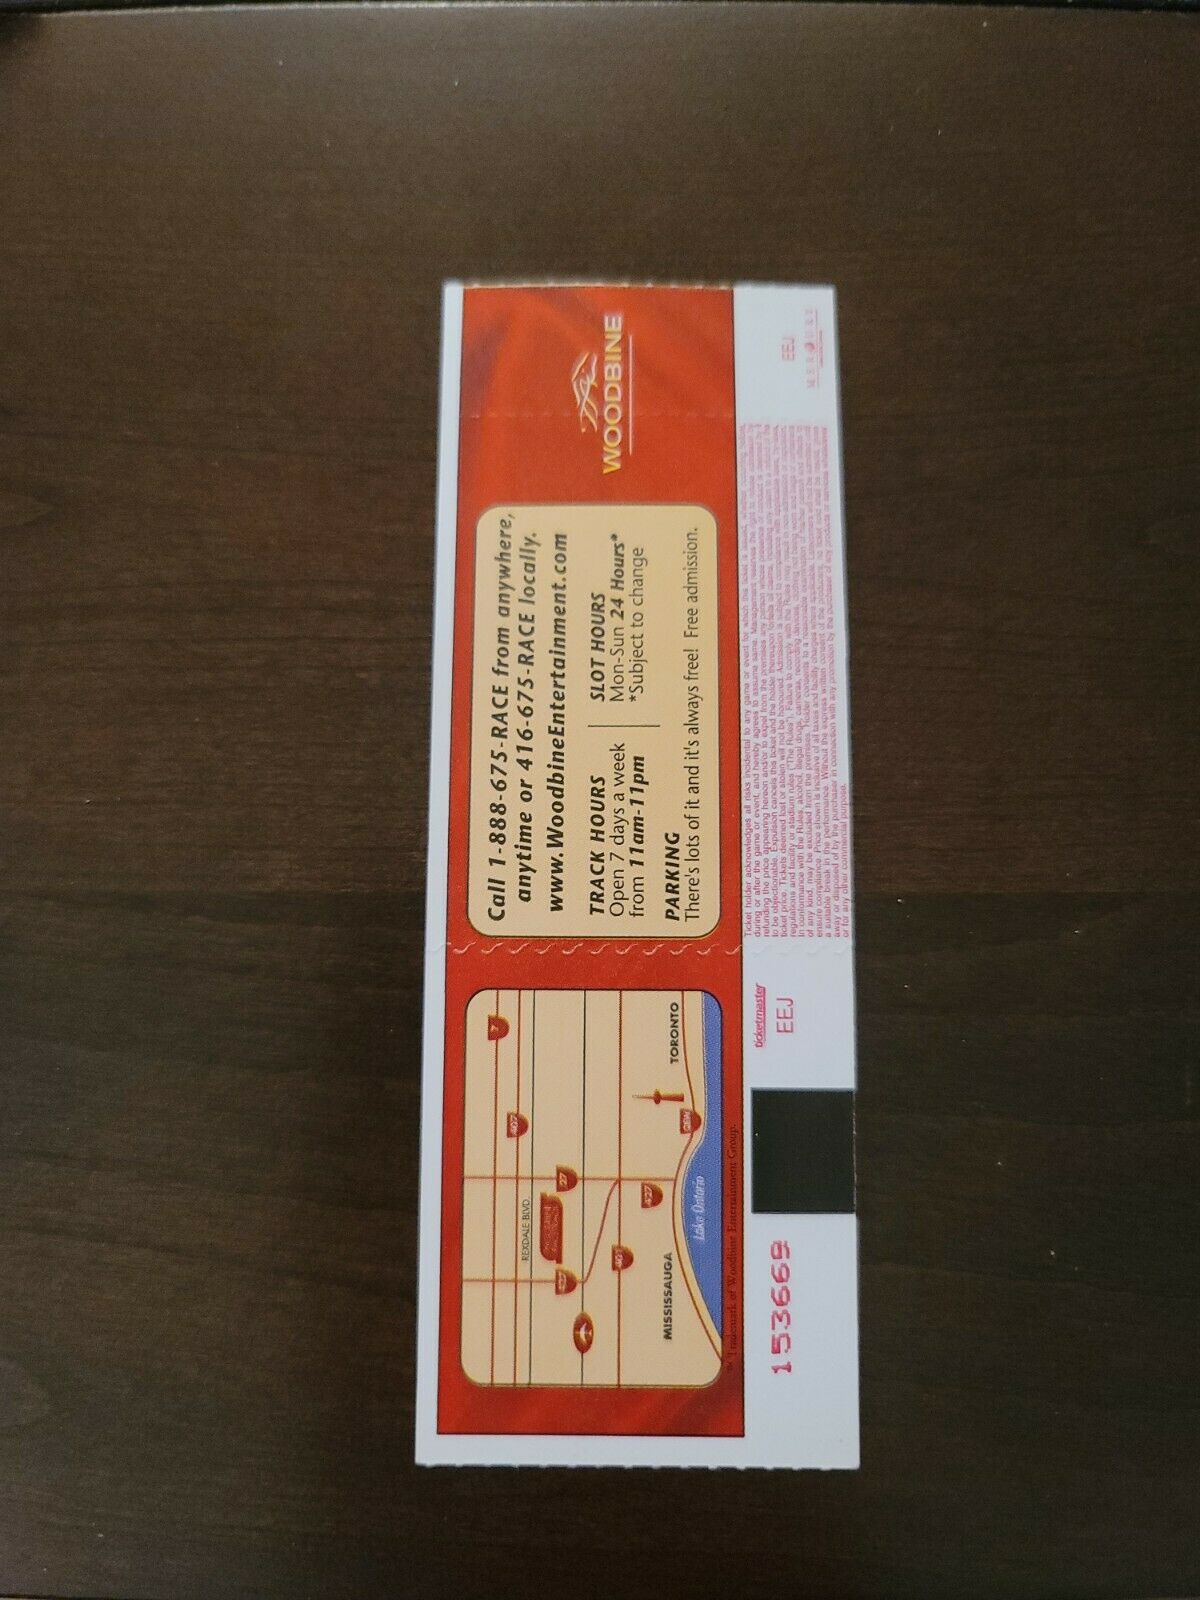 Metric 2006, Toronto Kool Haus Original Concert Ticket Stub